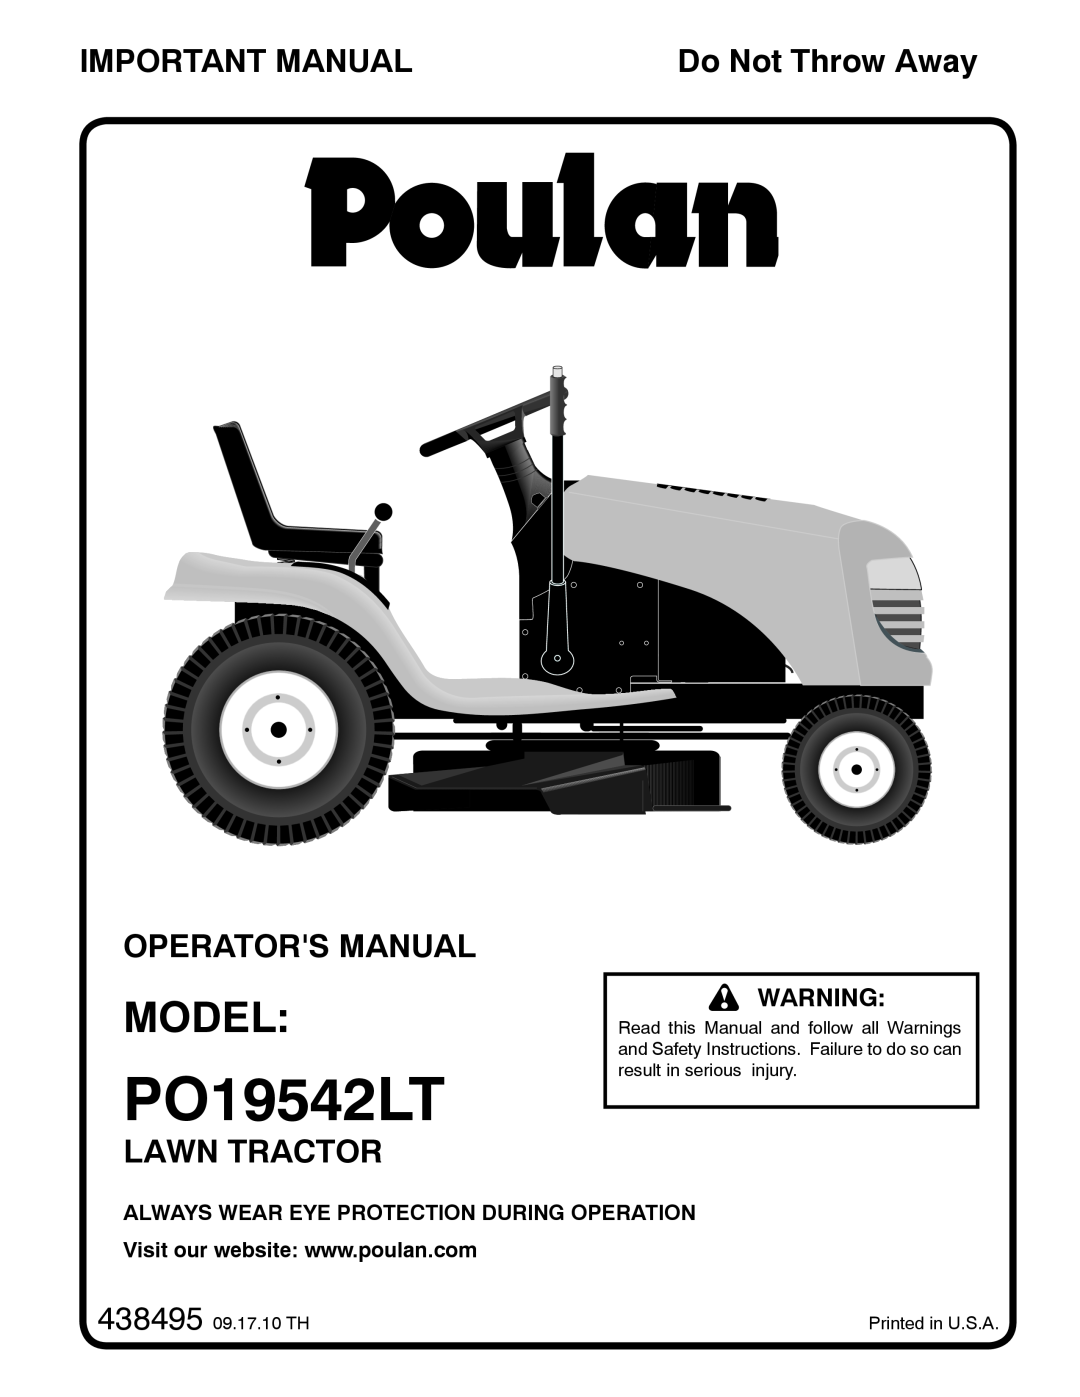 Poulan PO19542LT manual Model, Important Manual, Do Not Throw Away, Repair Parts Manual, Lawn Tractor, 532, 02494 